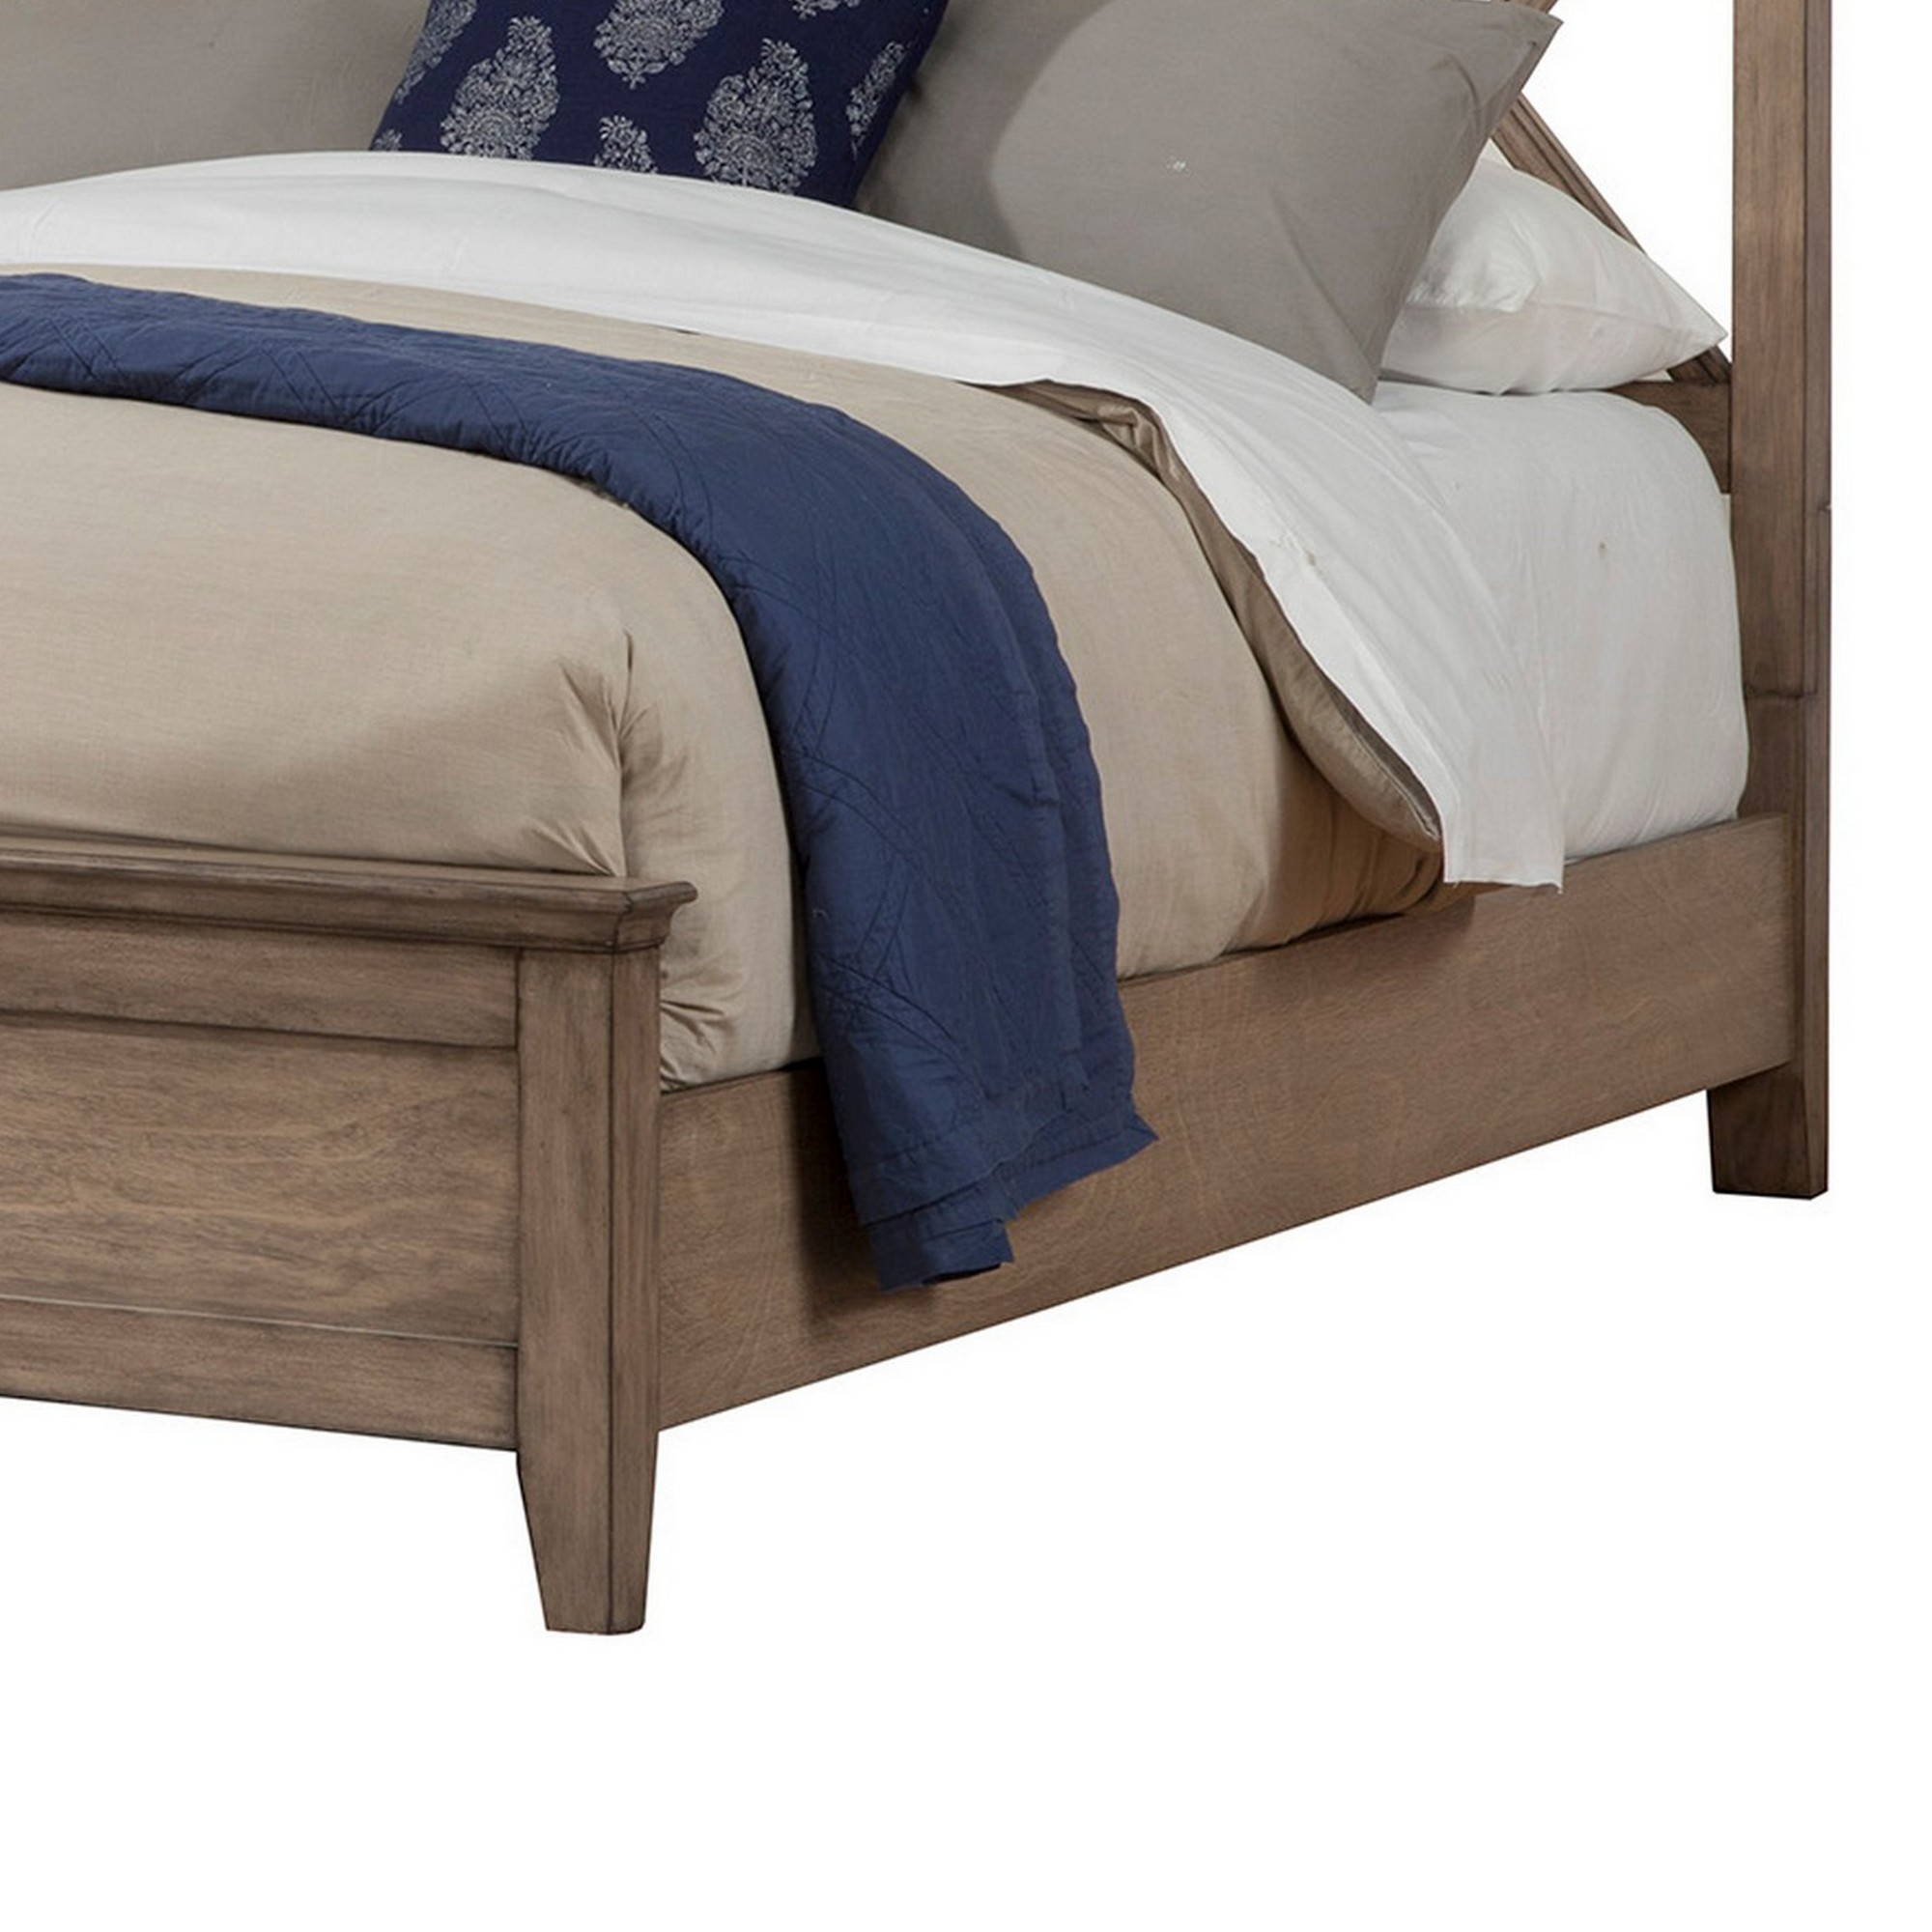 Pixi Full Size Panel Bed, Natural Brown Mahogany, Crossbuck Headboard - Saltoro Sherpi